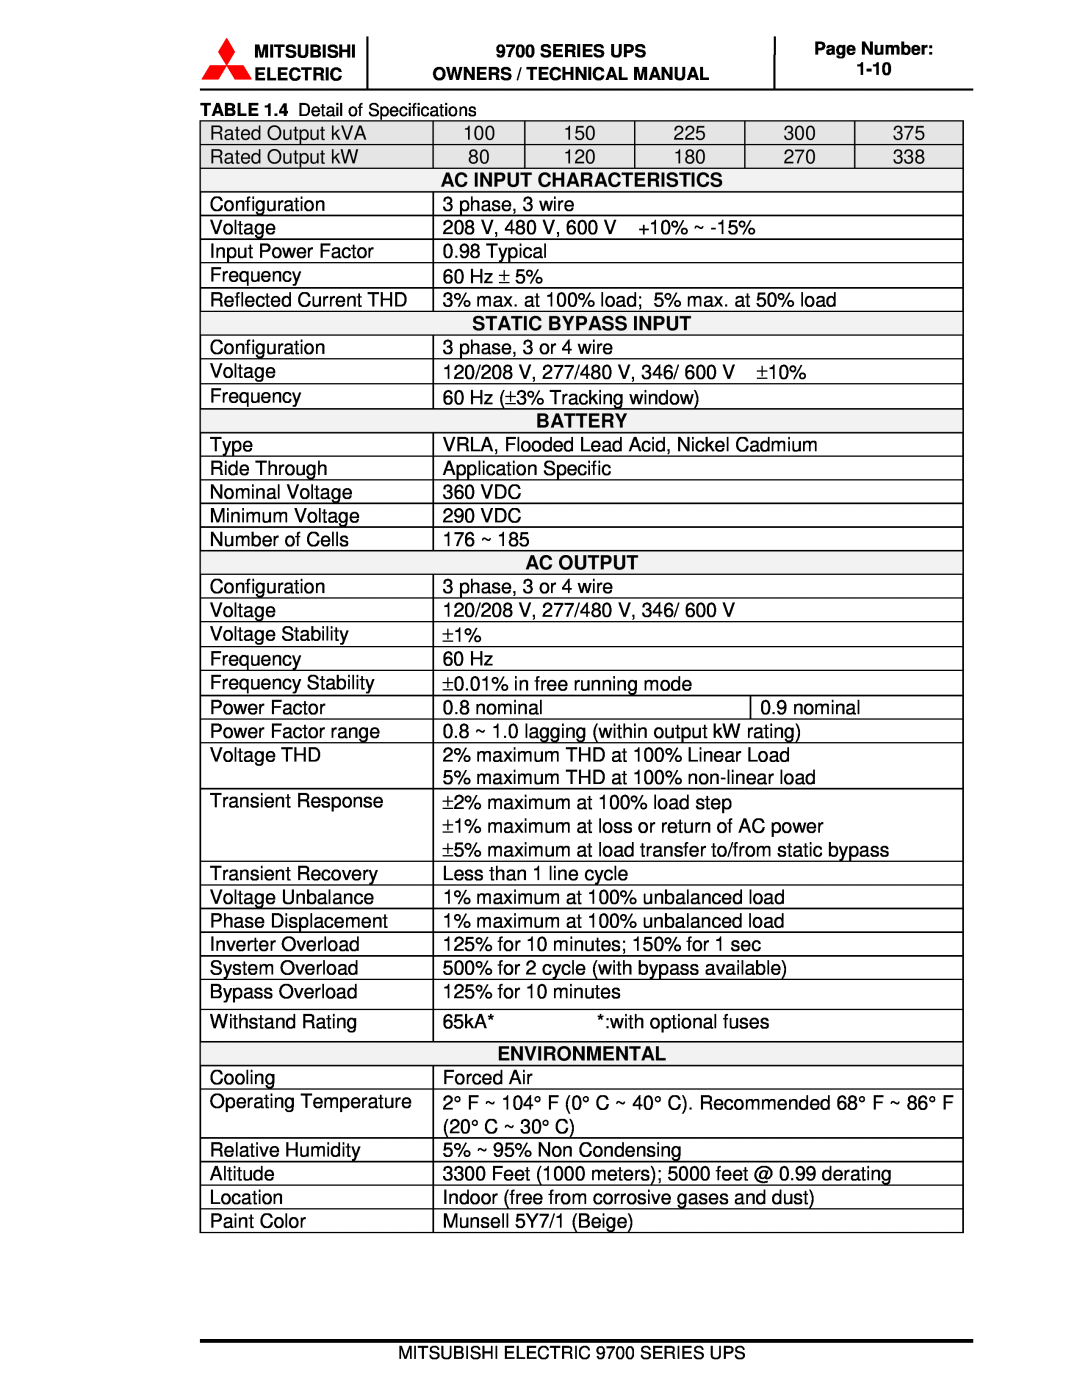 Mitsubishi Electronics 9700 Series technical manual Characteristics, Ac Output, ± 1% 